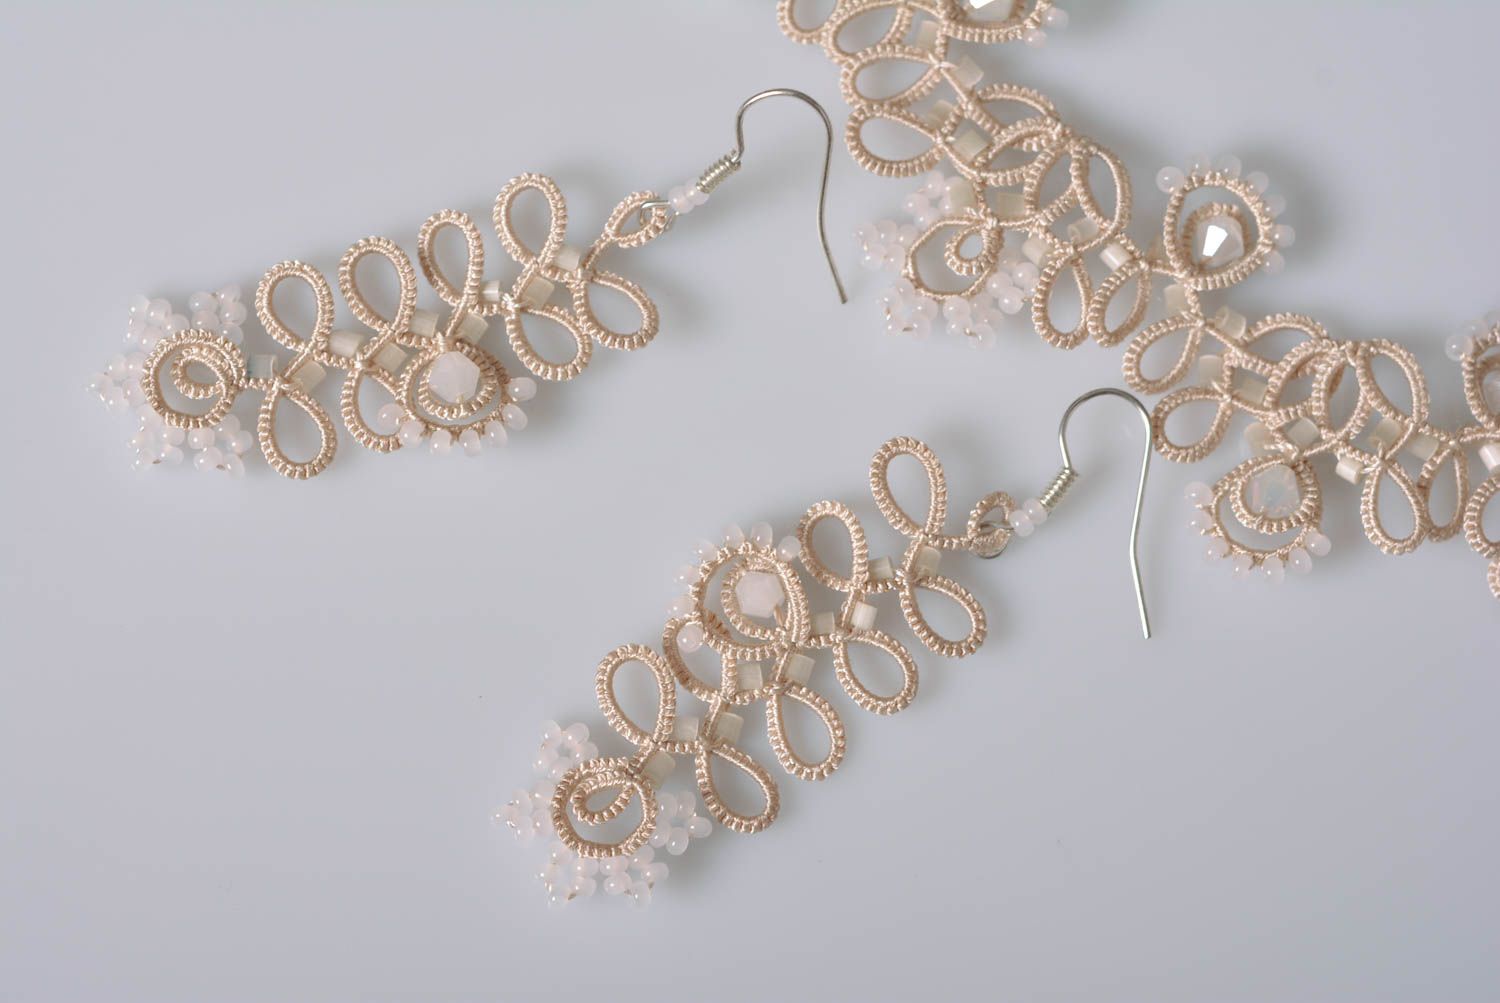 Handmade jewelry set designer necklace handmade earrings tatting lace gift ideas photo 4